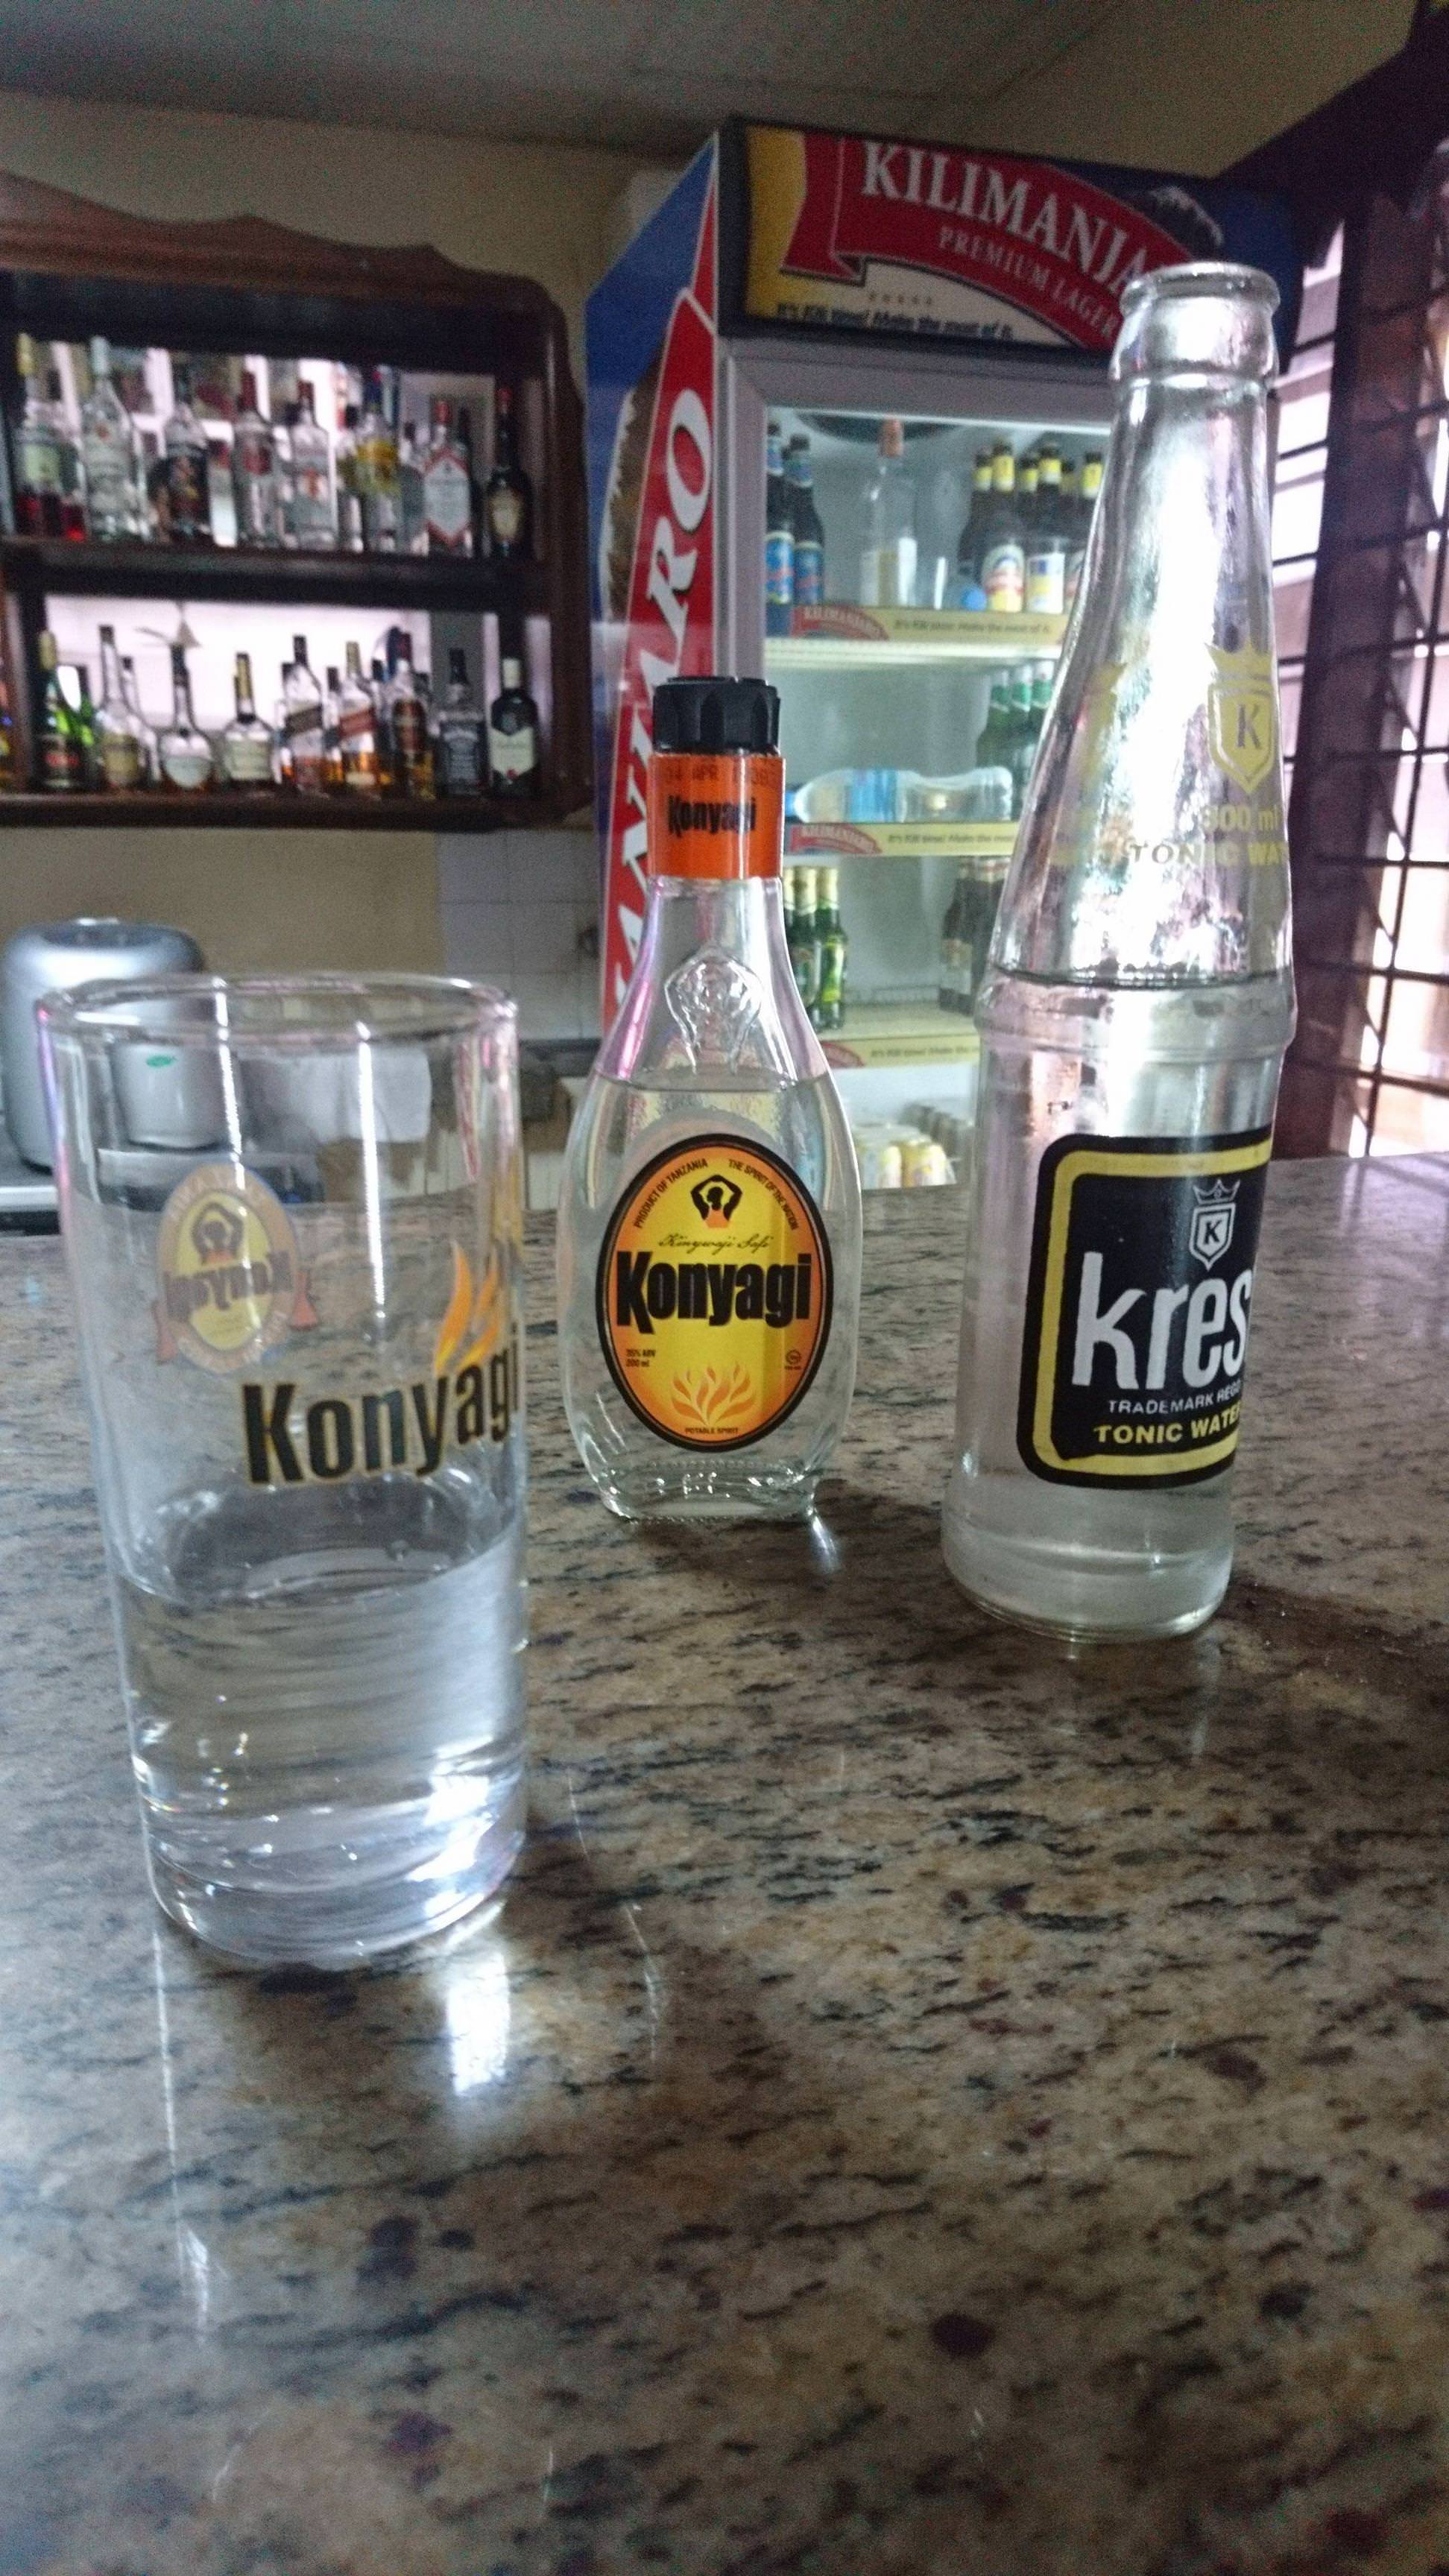 Konyagi and Krest Tonic water